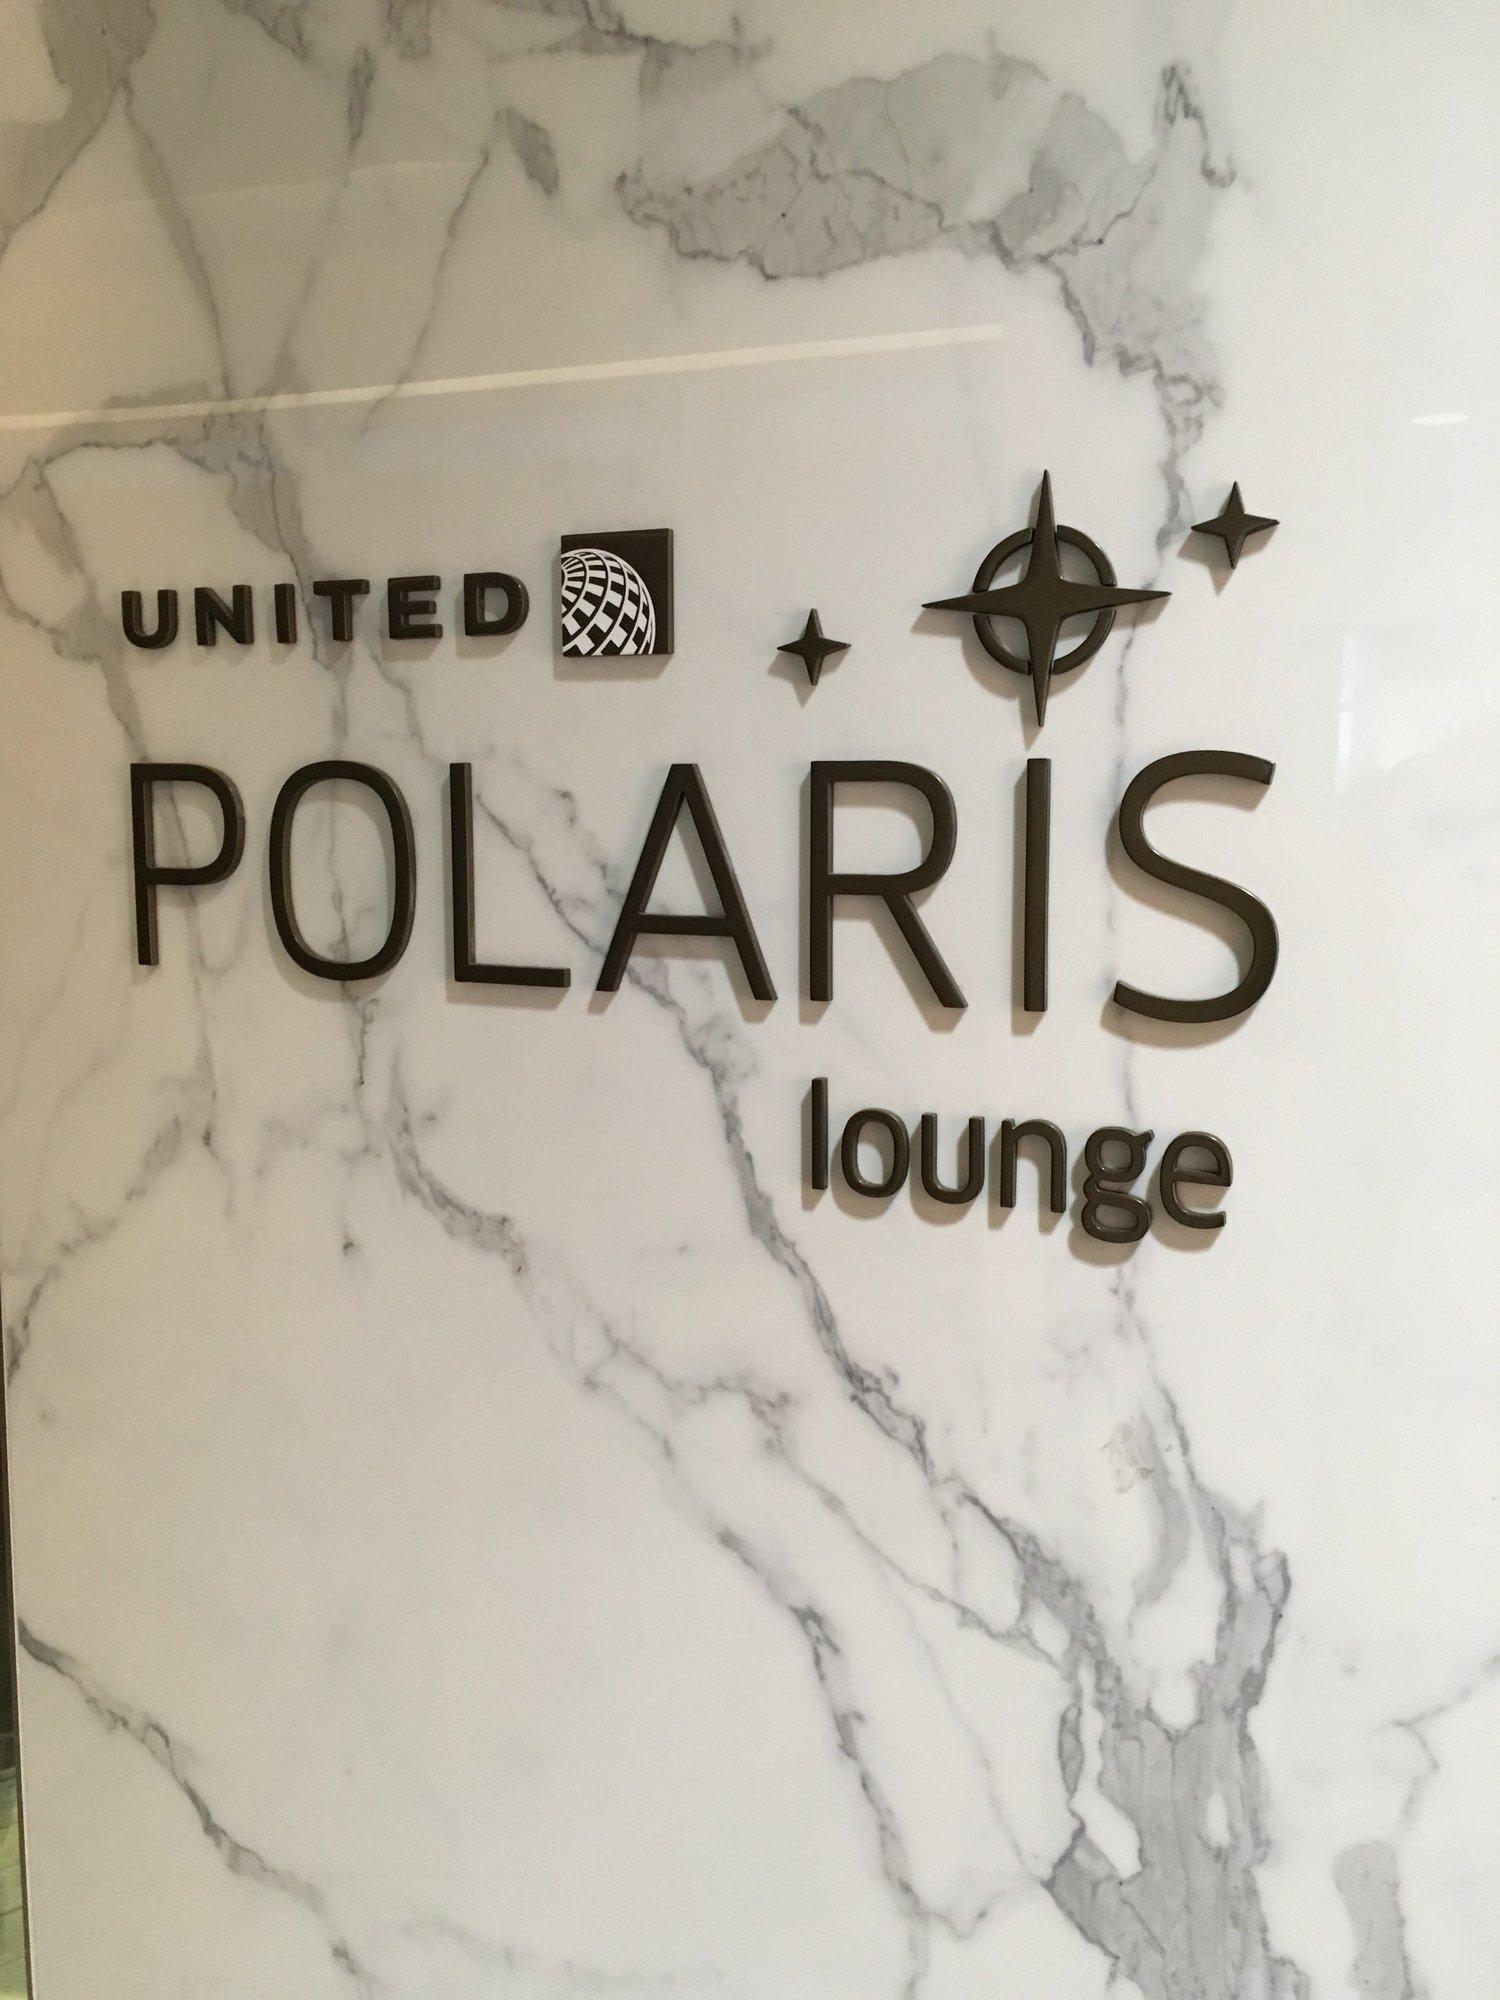 United Airlines Polaris Lounge image 83 of 92